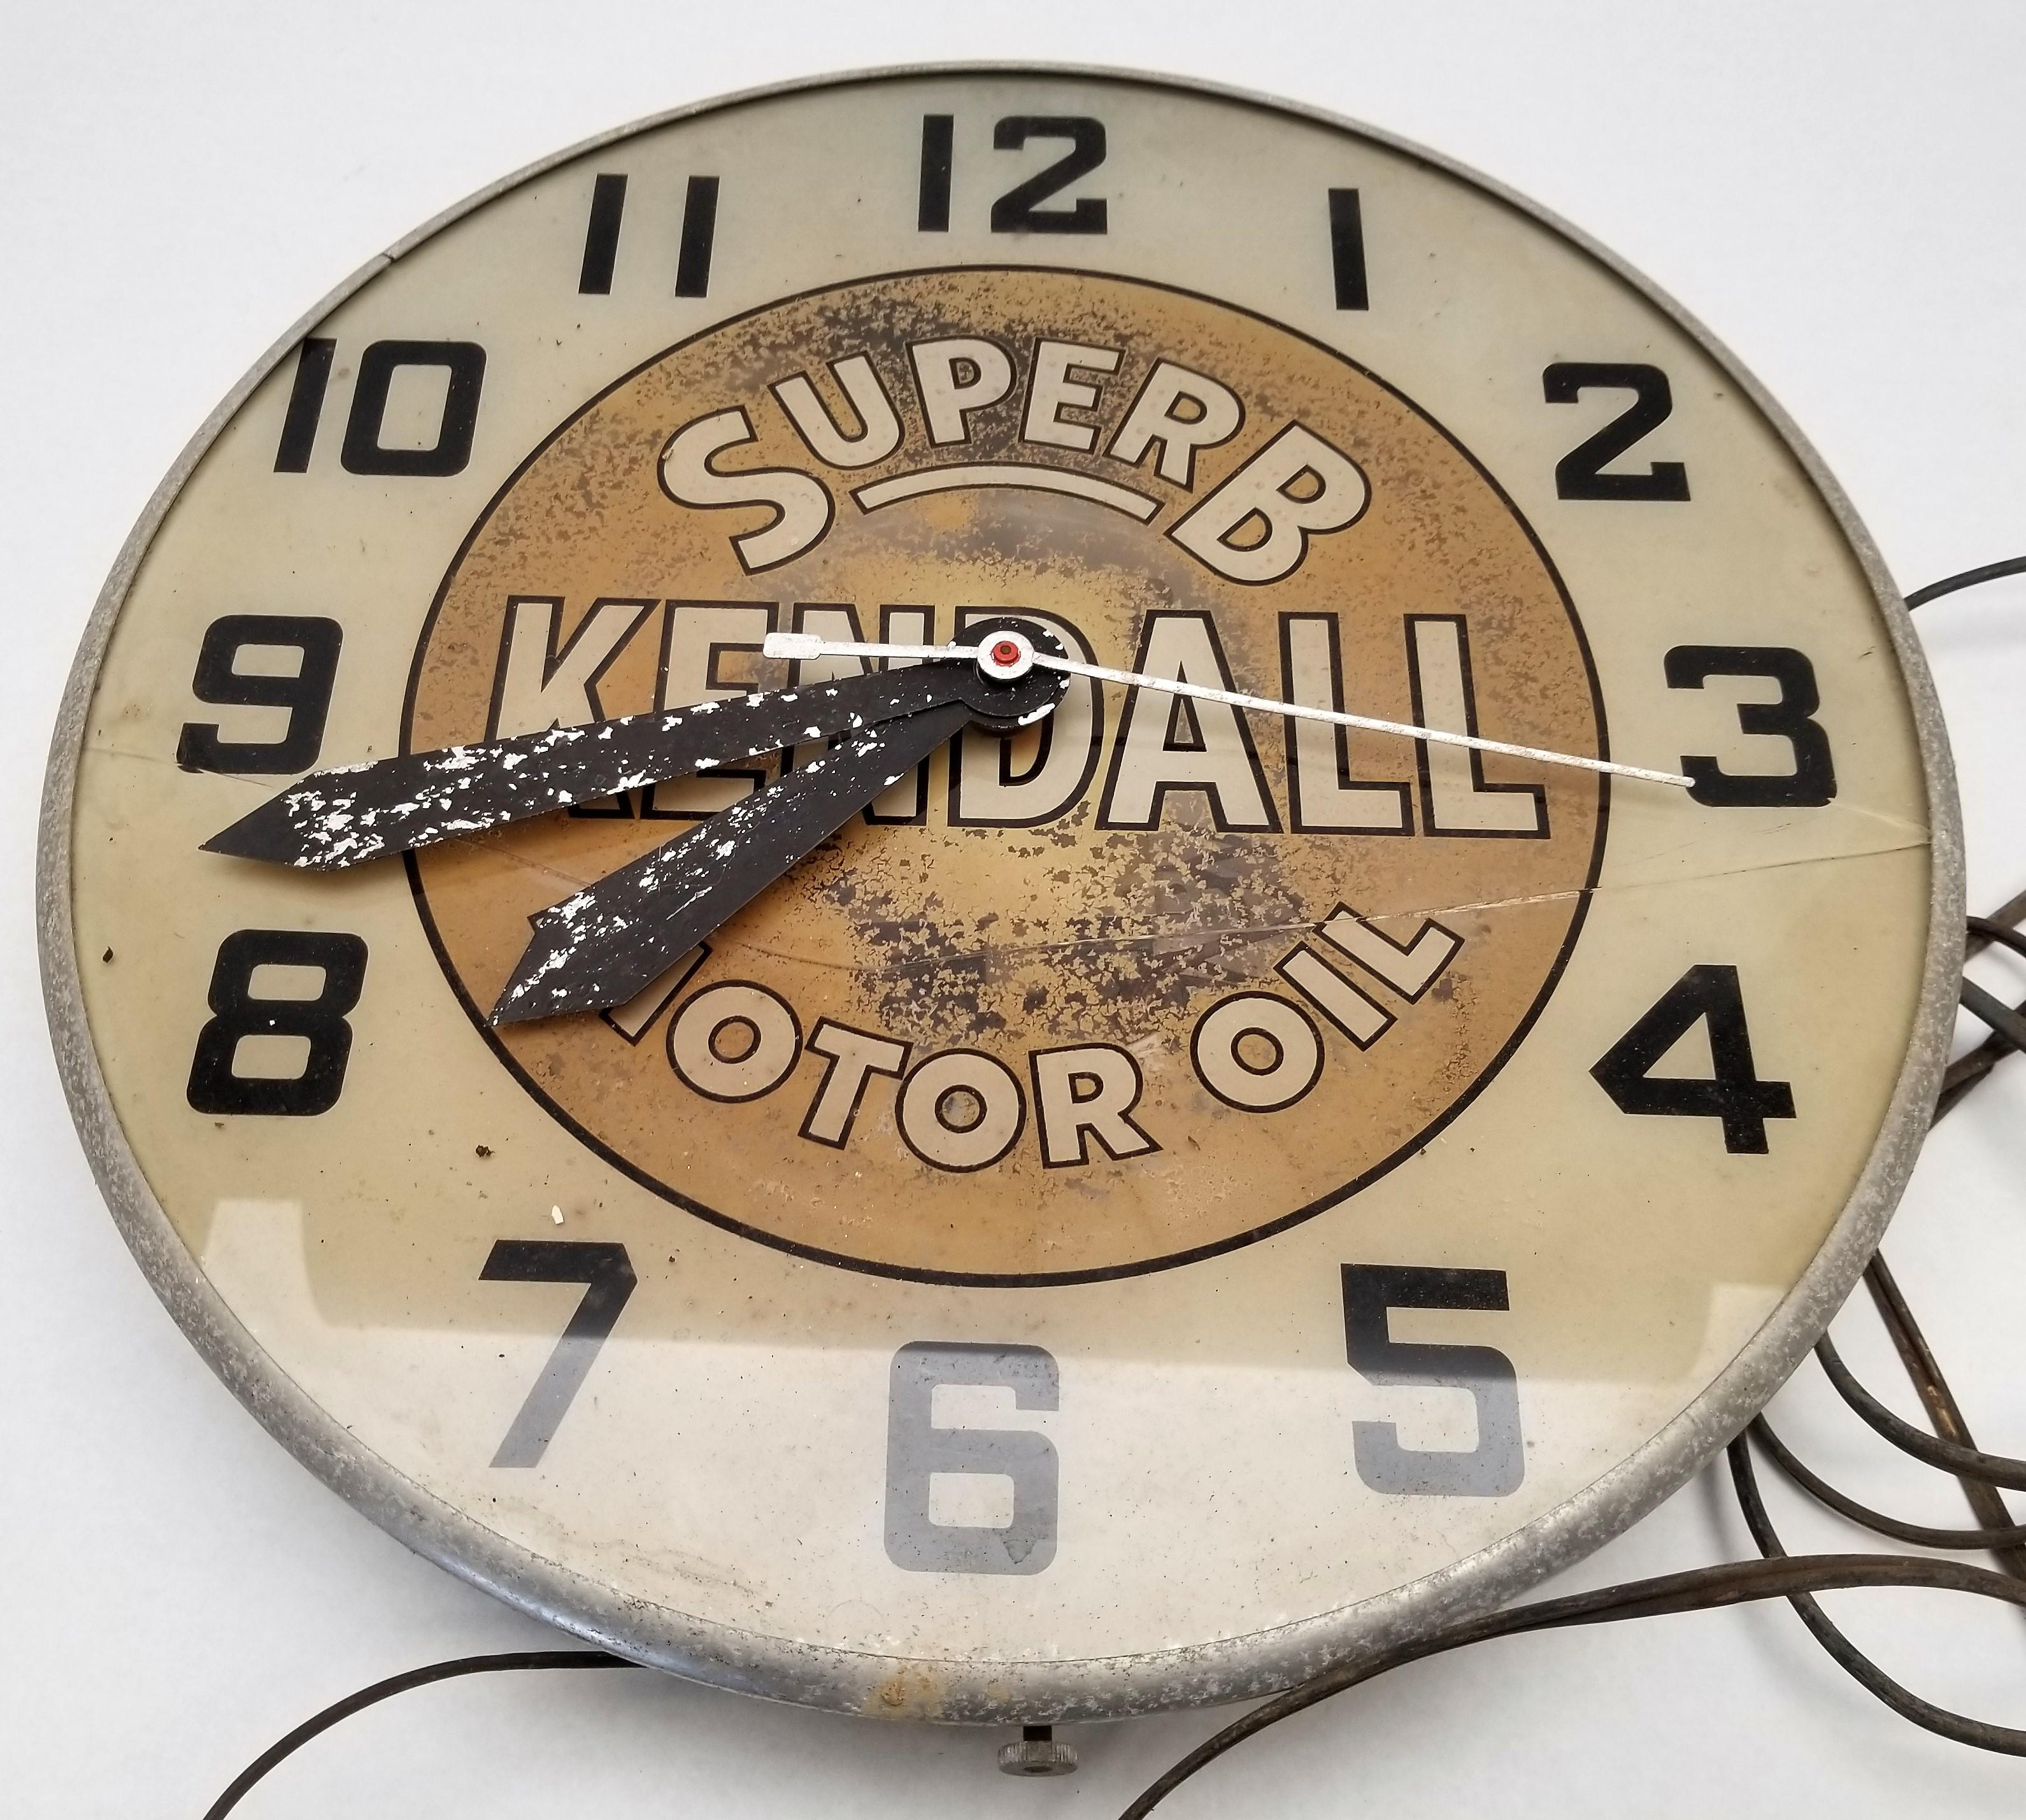 "Kendall Super B Motor Oil" Electric Wall Clock